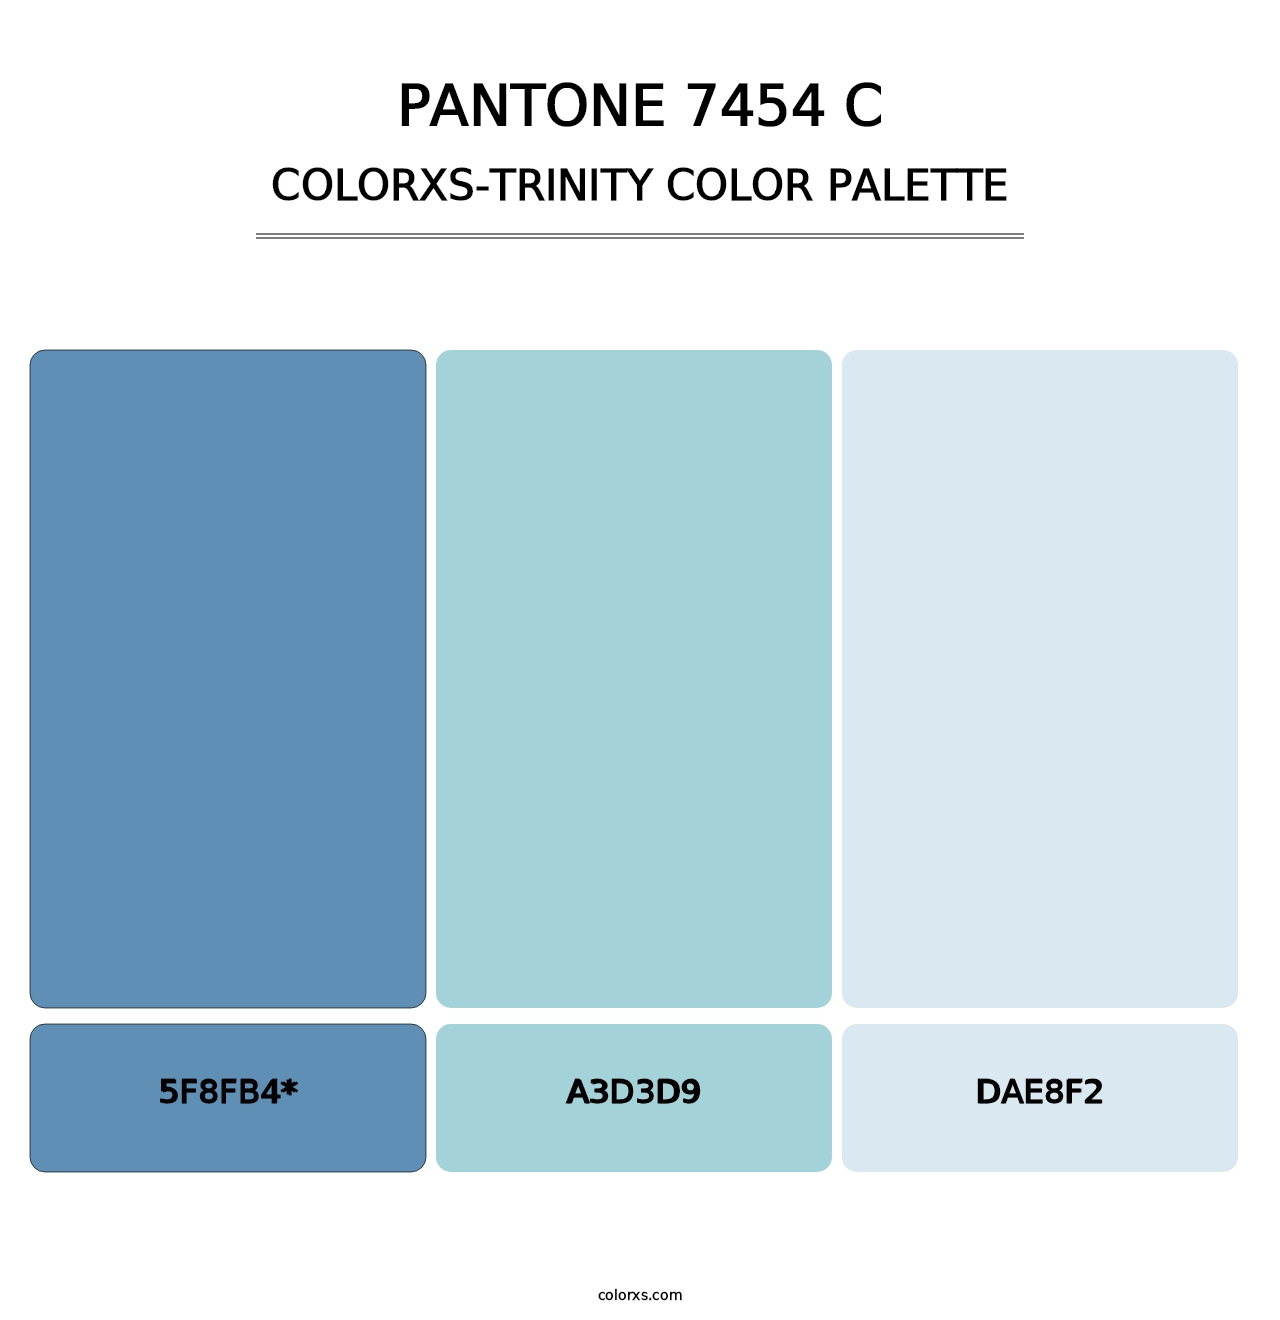 PANTONE 7454 C - Colorxs Trinity Palette